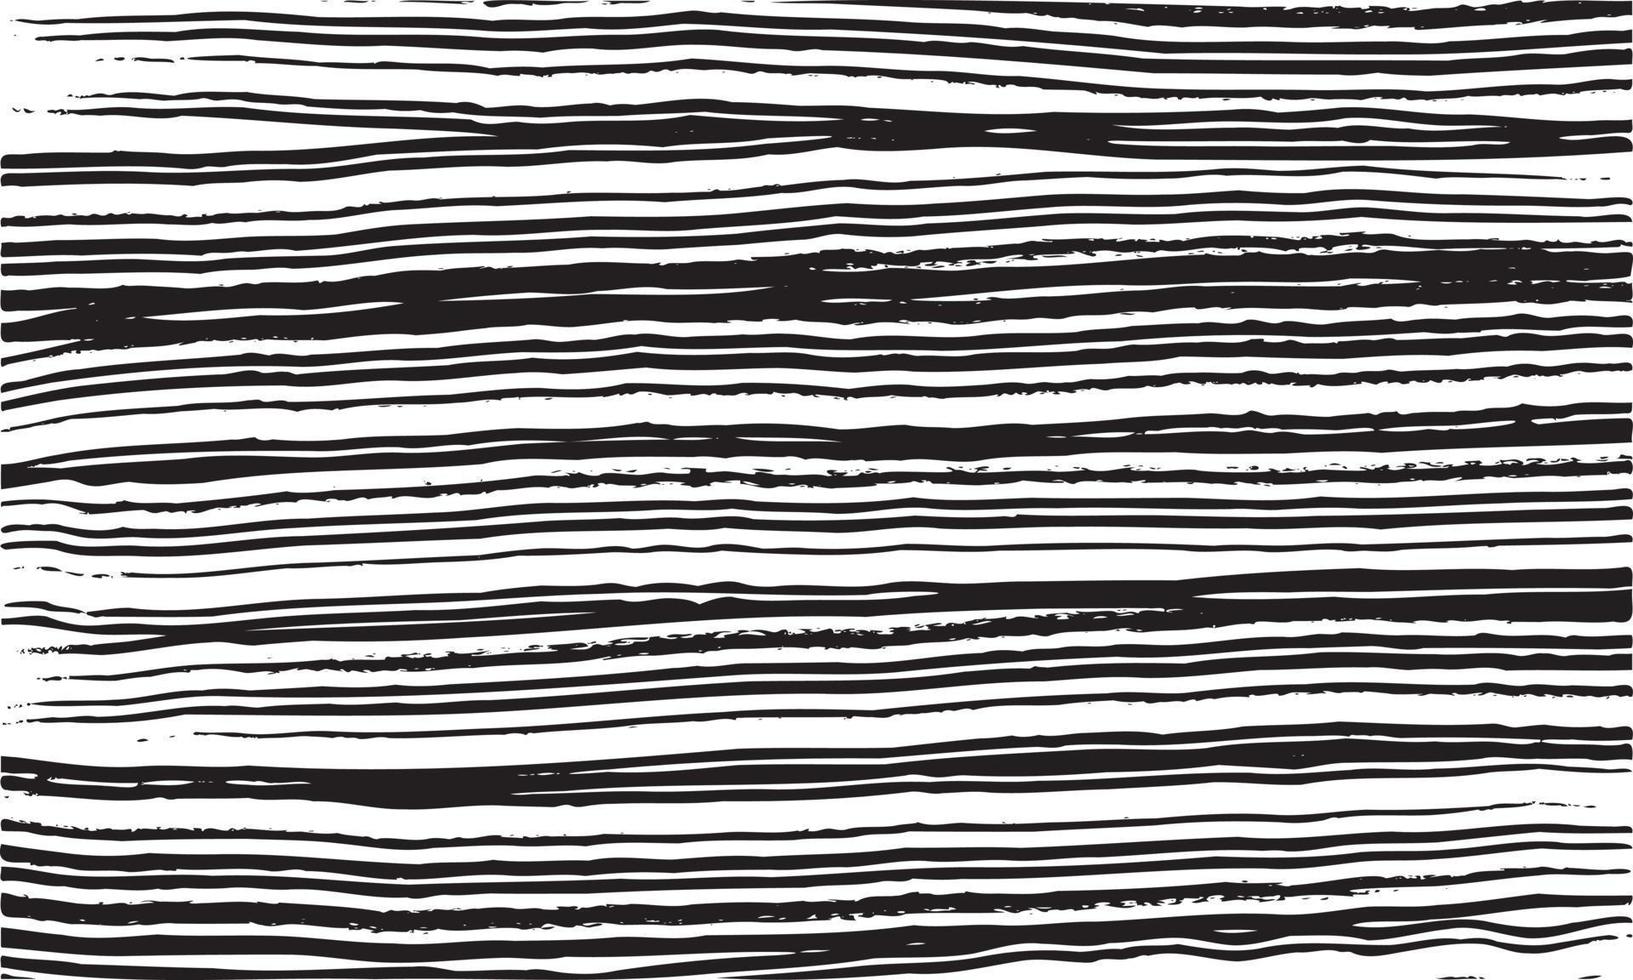 diseño vectorial de línea de trazo de pintura negra abstracta. fondo de trazo de tinta. pincel de garabato dibujado para papel tapiz vector